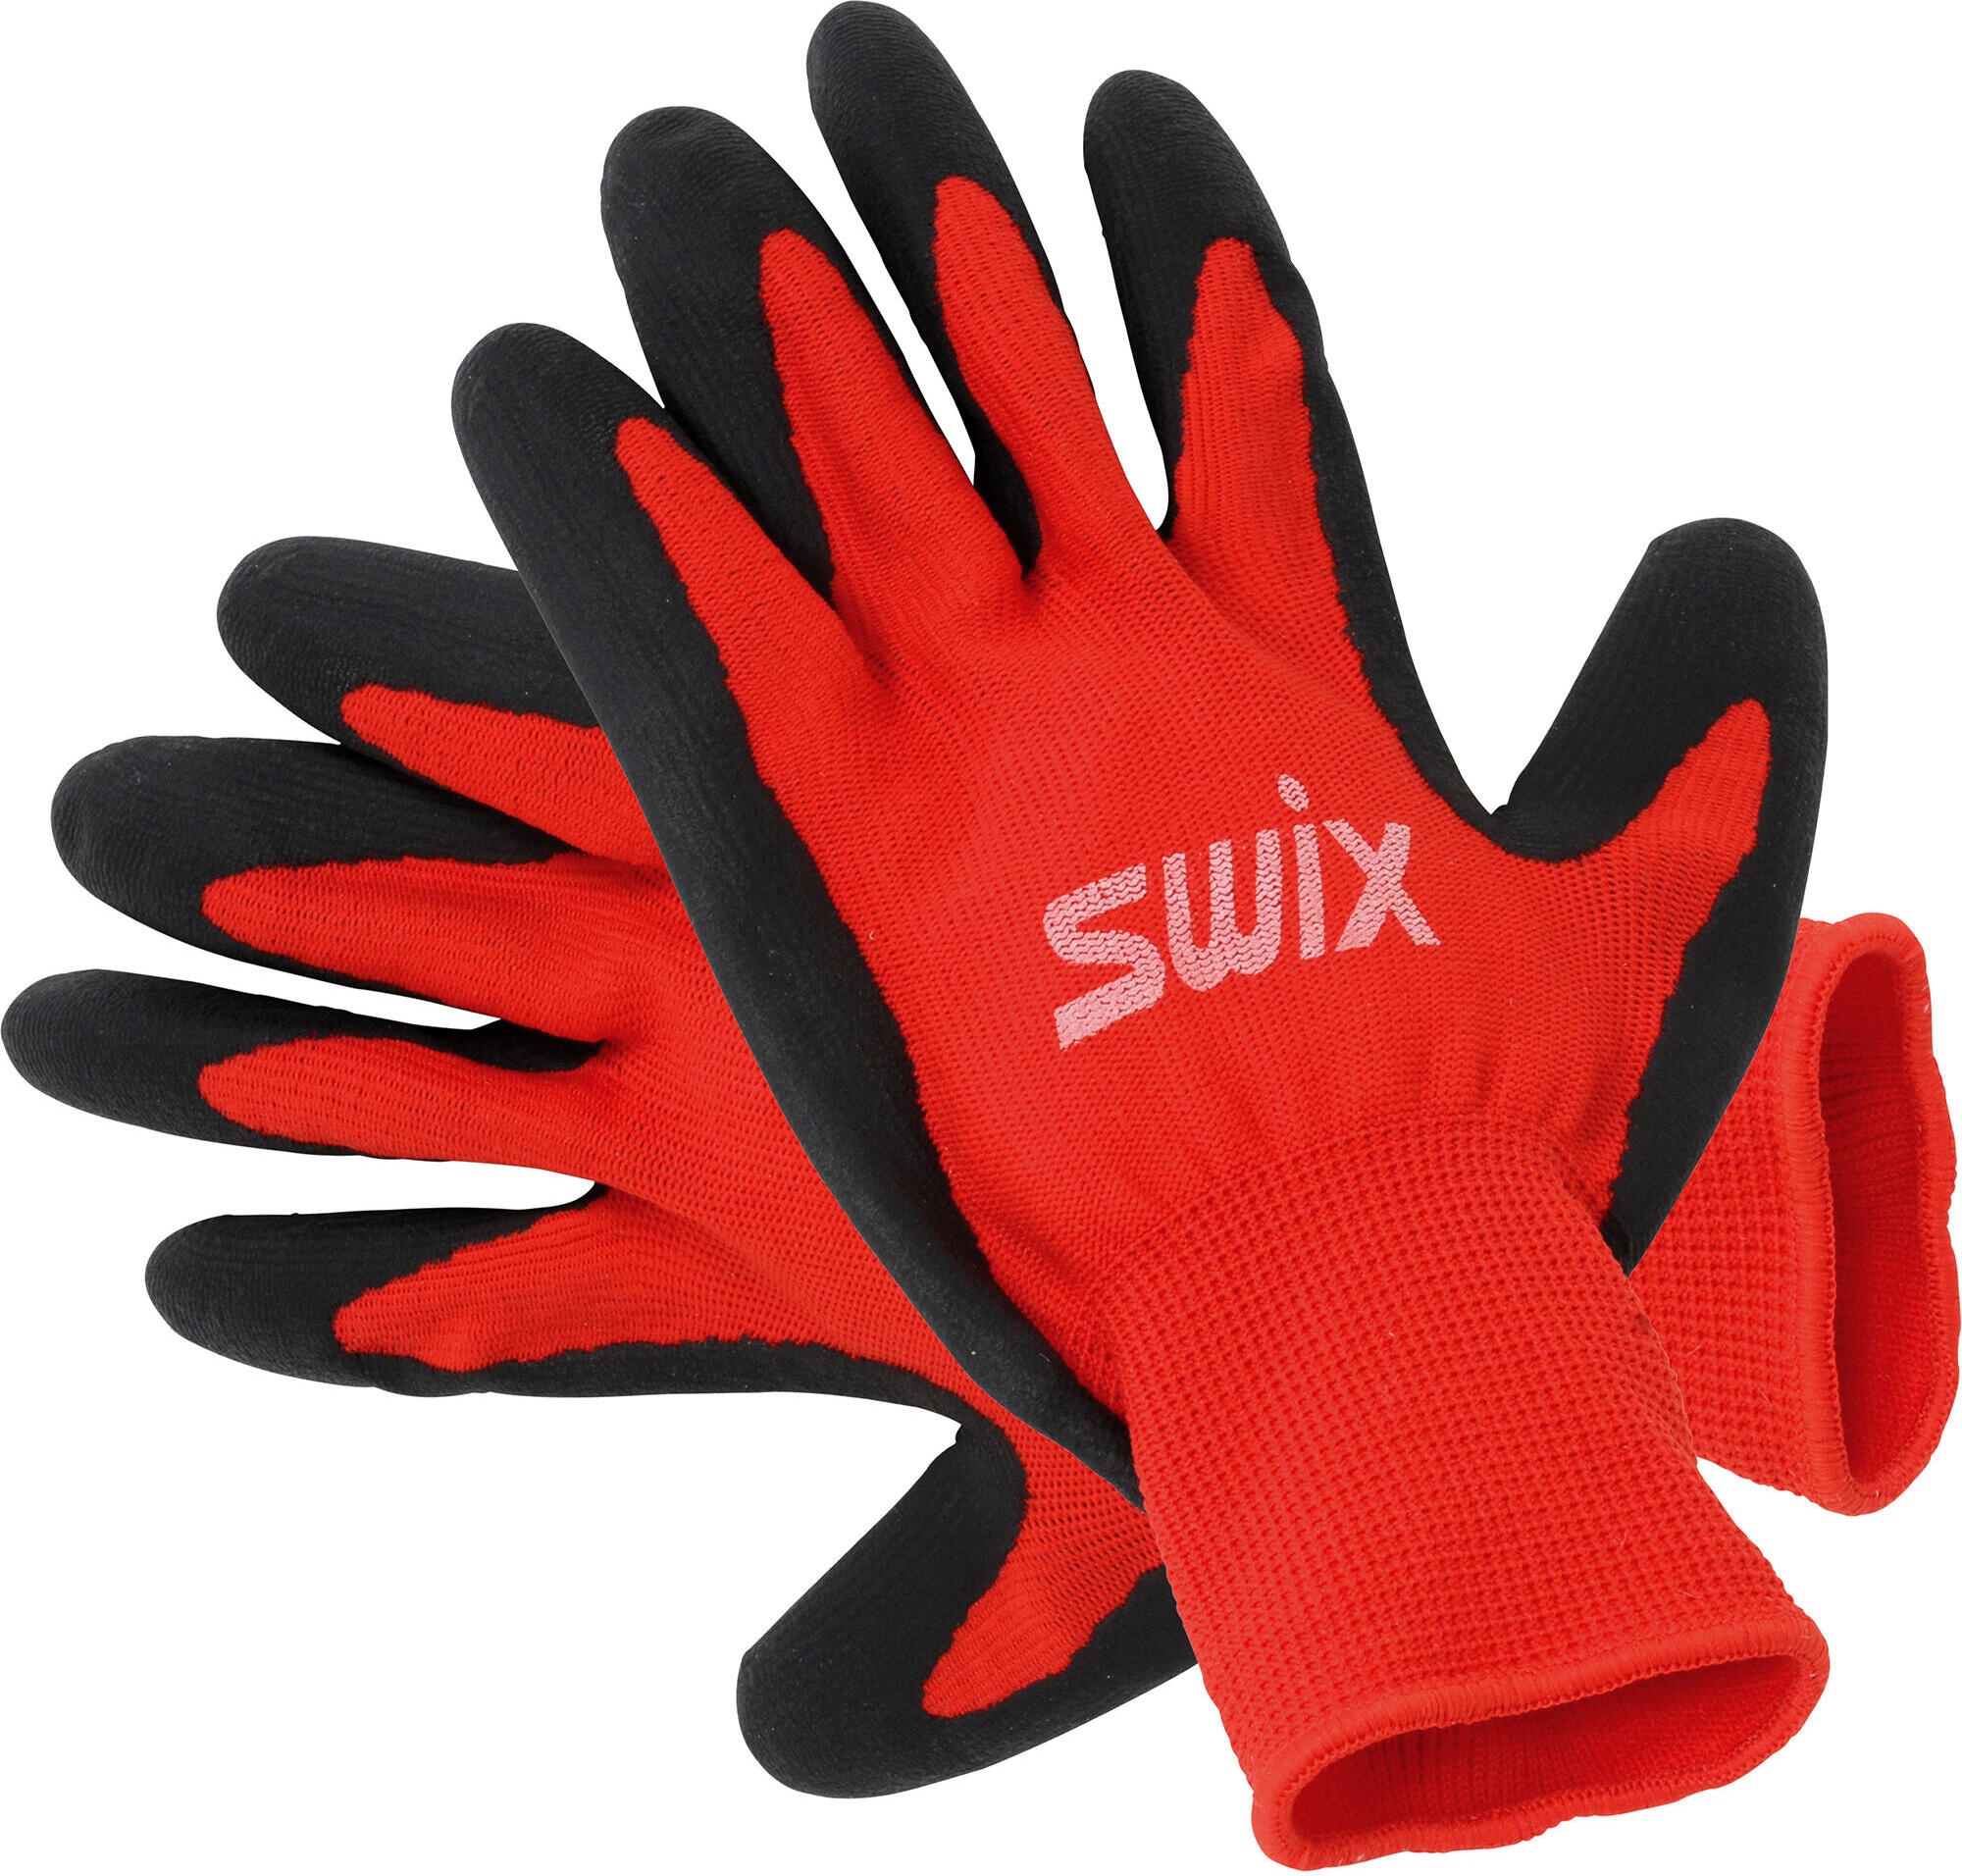 Swix R196 Tuning Glove red (90000) L